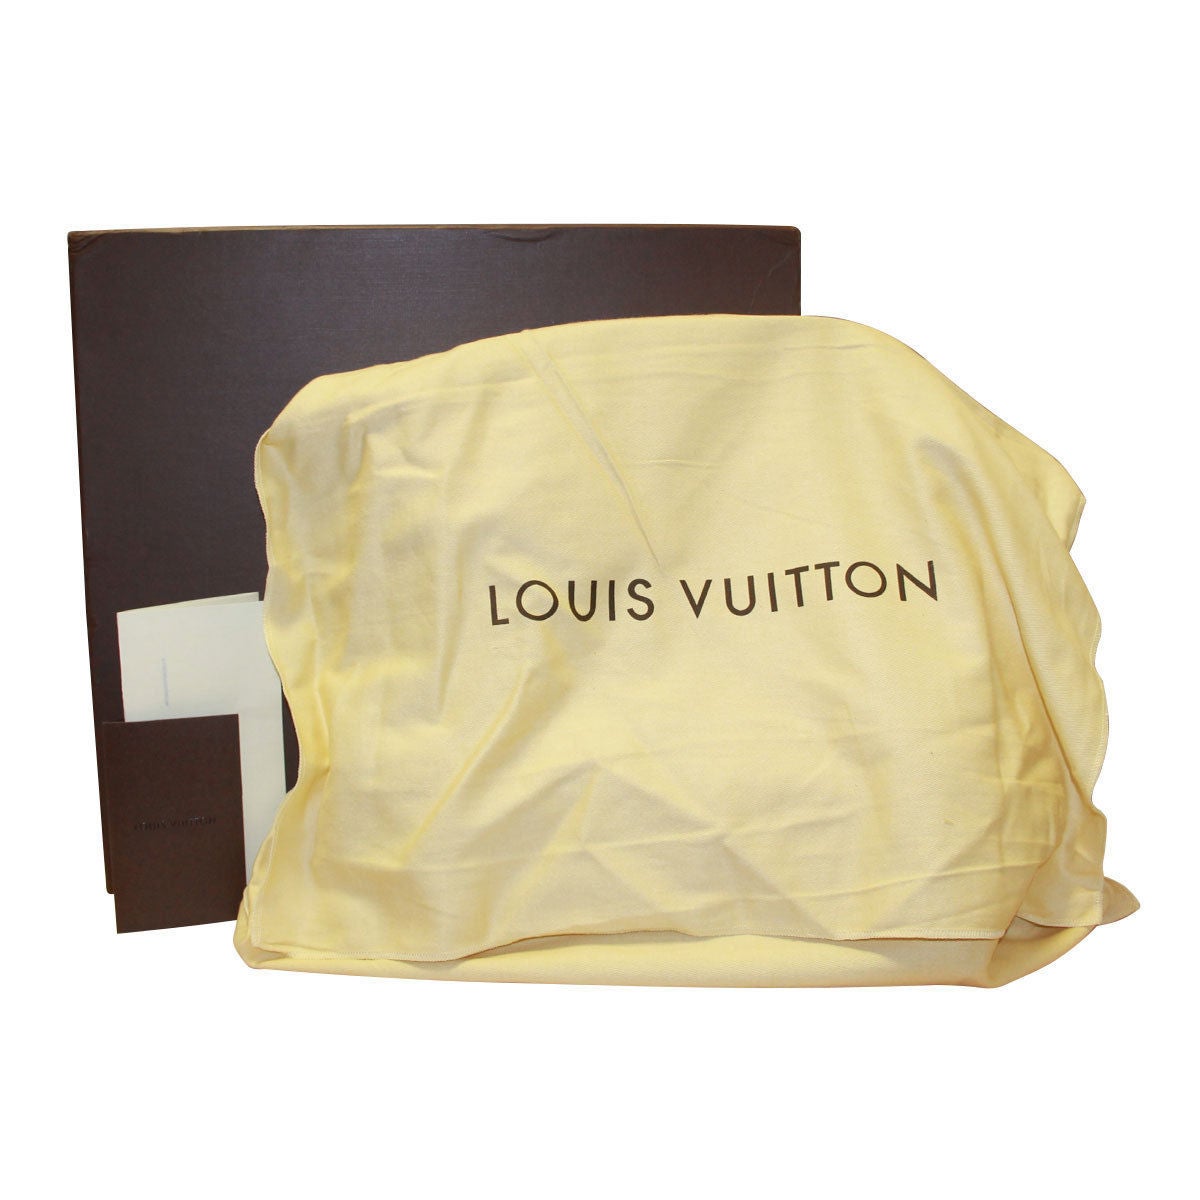 Louis Vuitton Tuileries Monogram Canvas Handbag Tote Purse New in Box 4